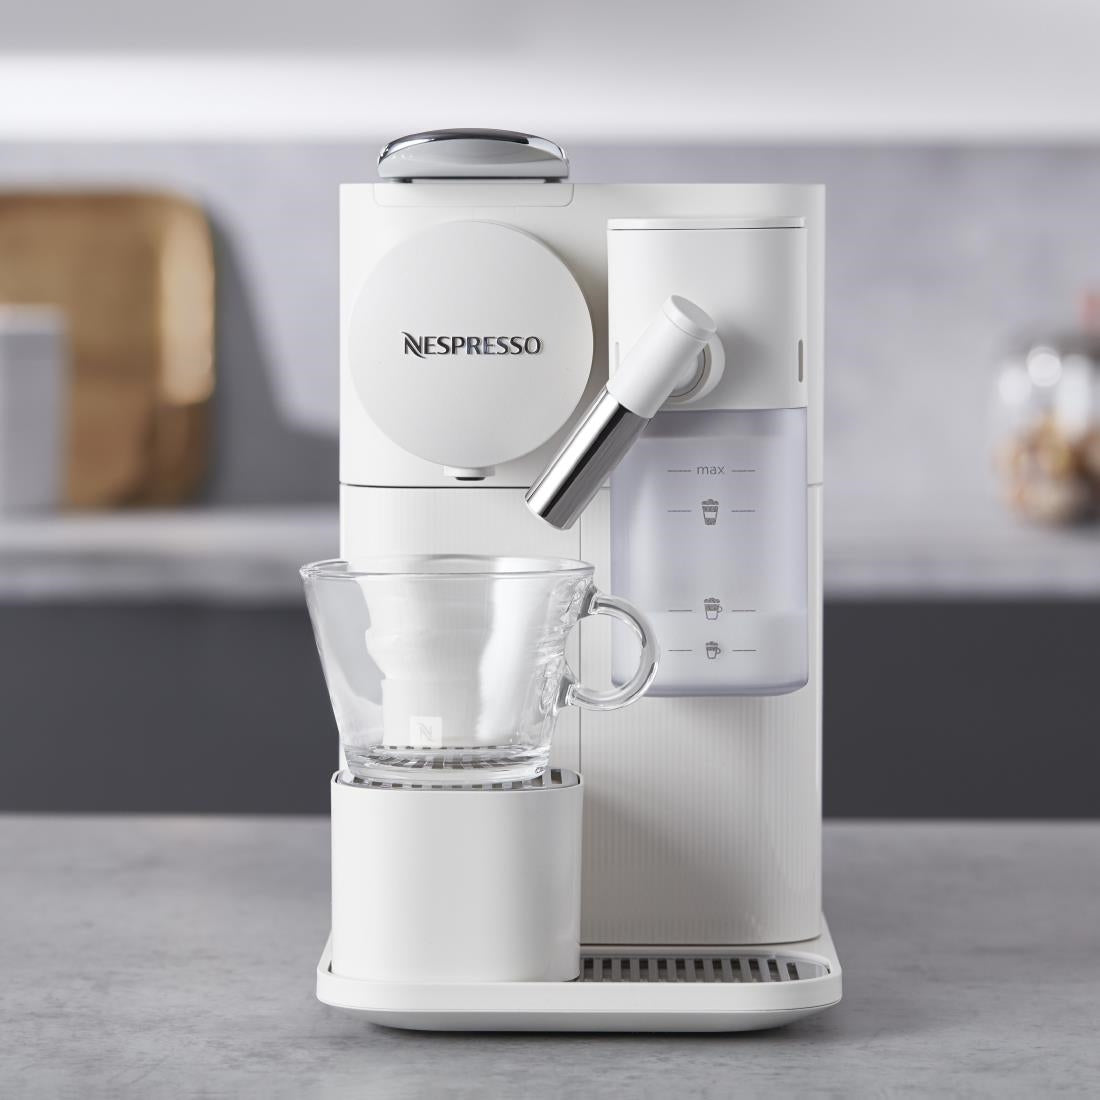 FT898 DeLonghi Nespresso Lattissima One Coffee Machine White JD Catering Equipment Solutions Ltd